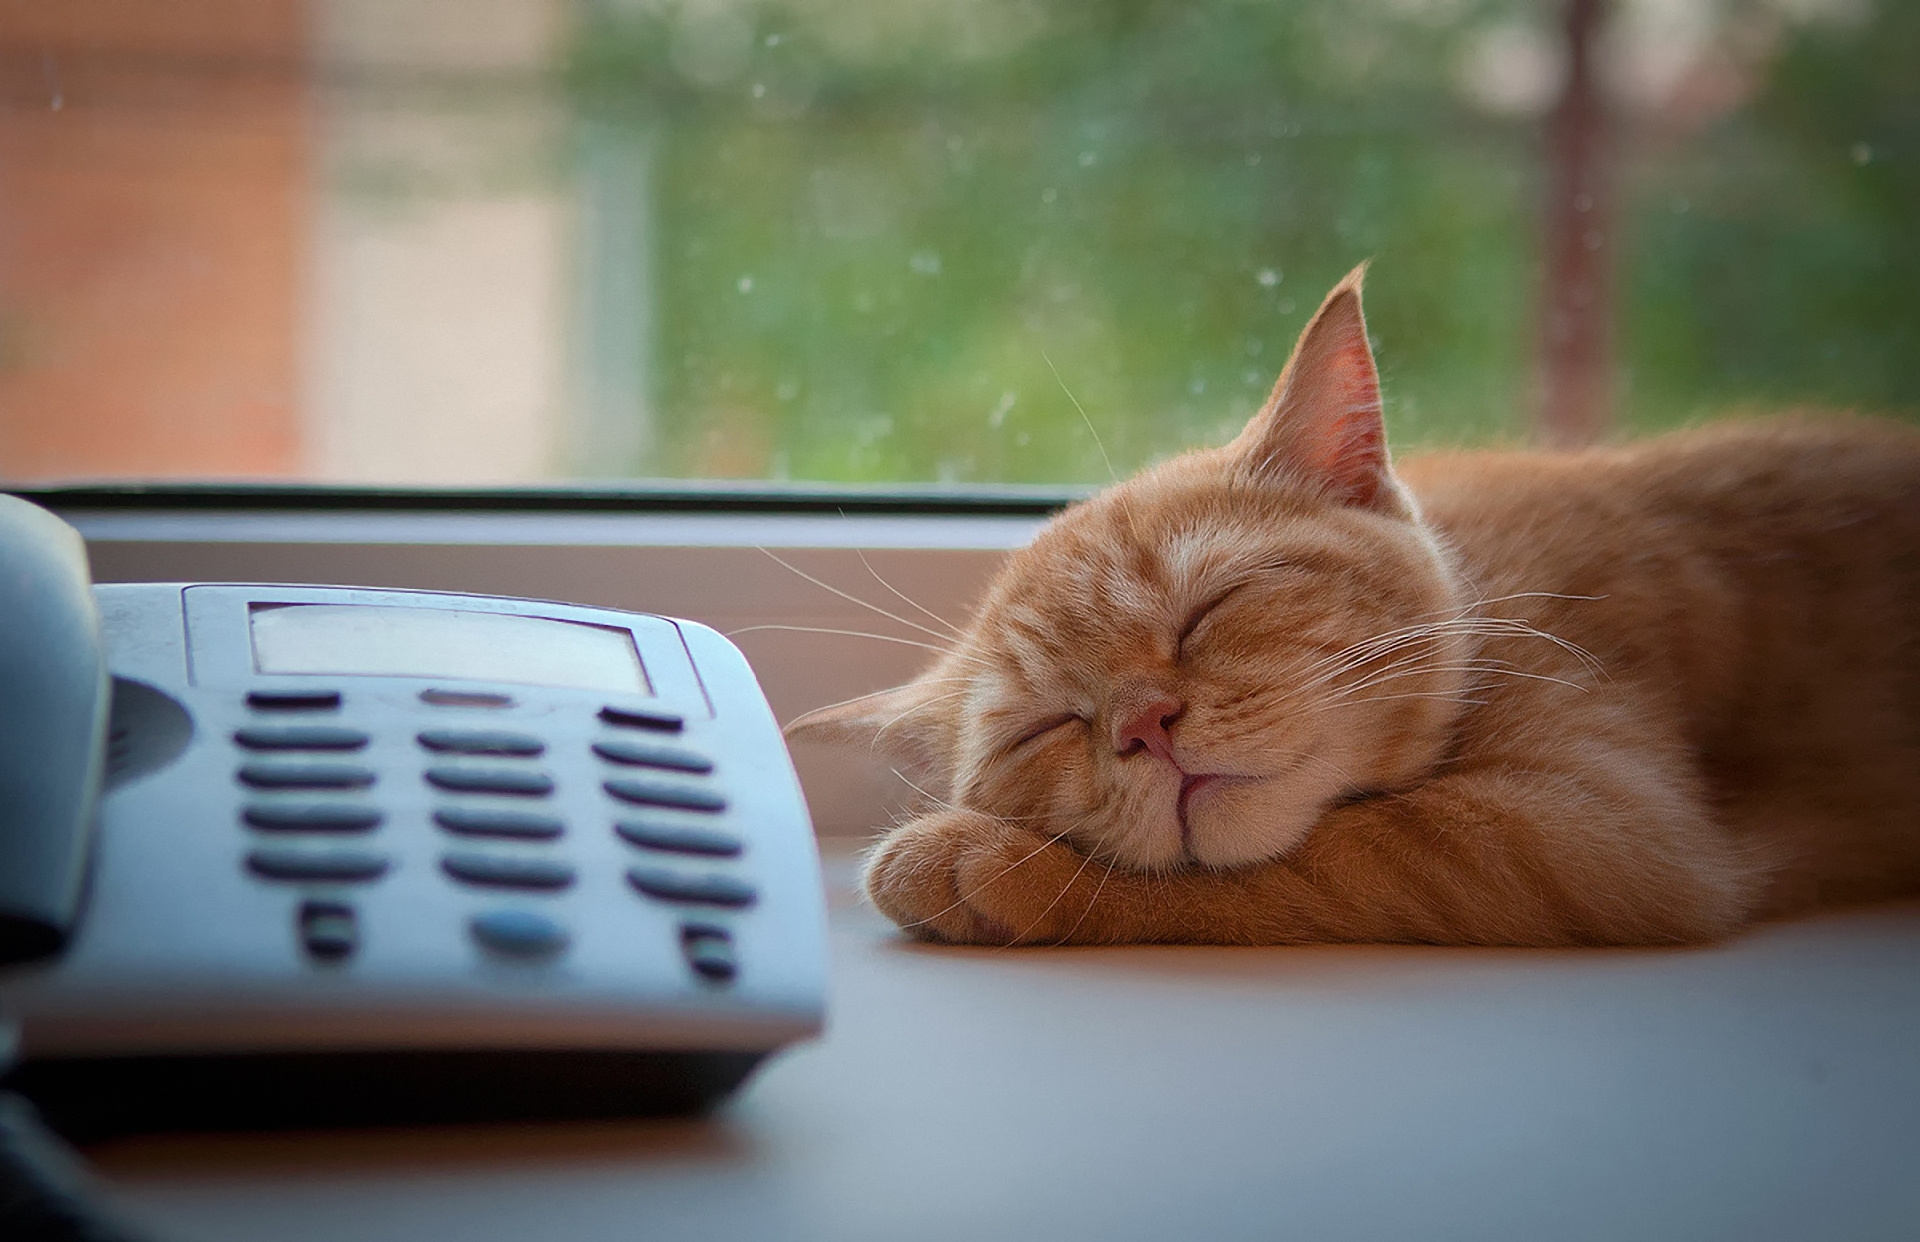 Cat Phone Sleep Window Sill Waiting   Free Stock Photos Images